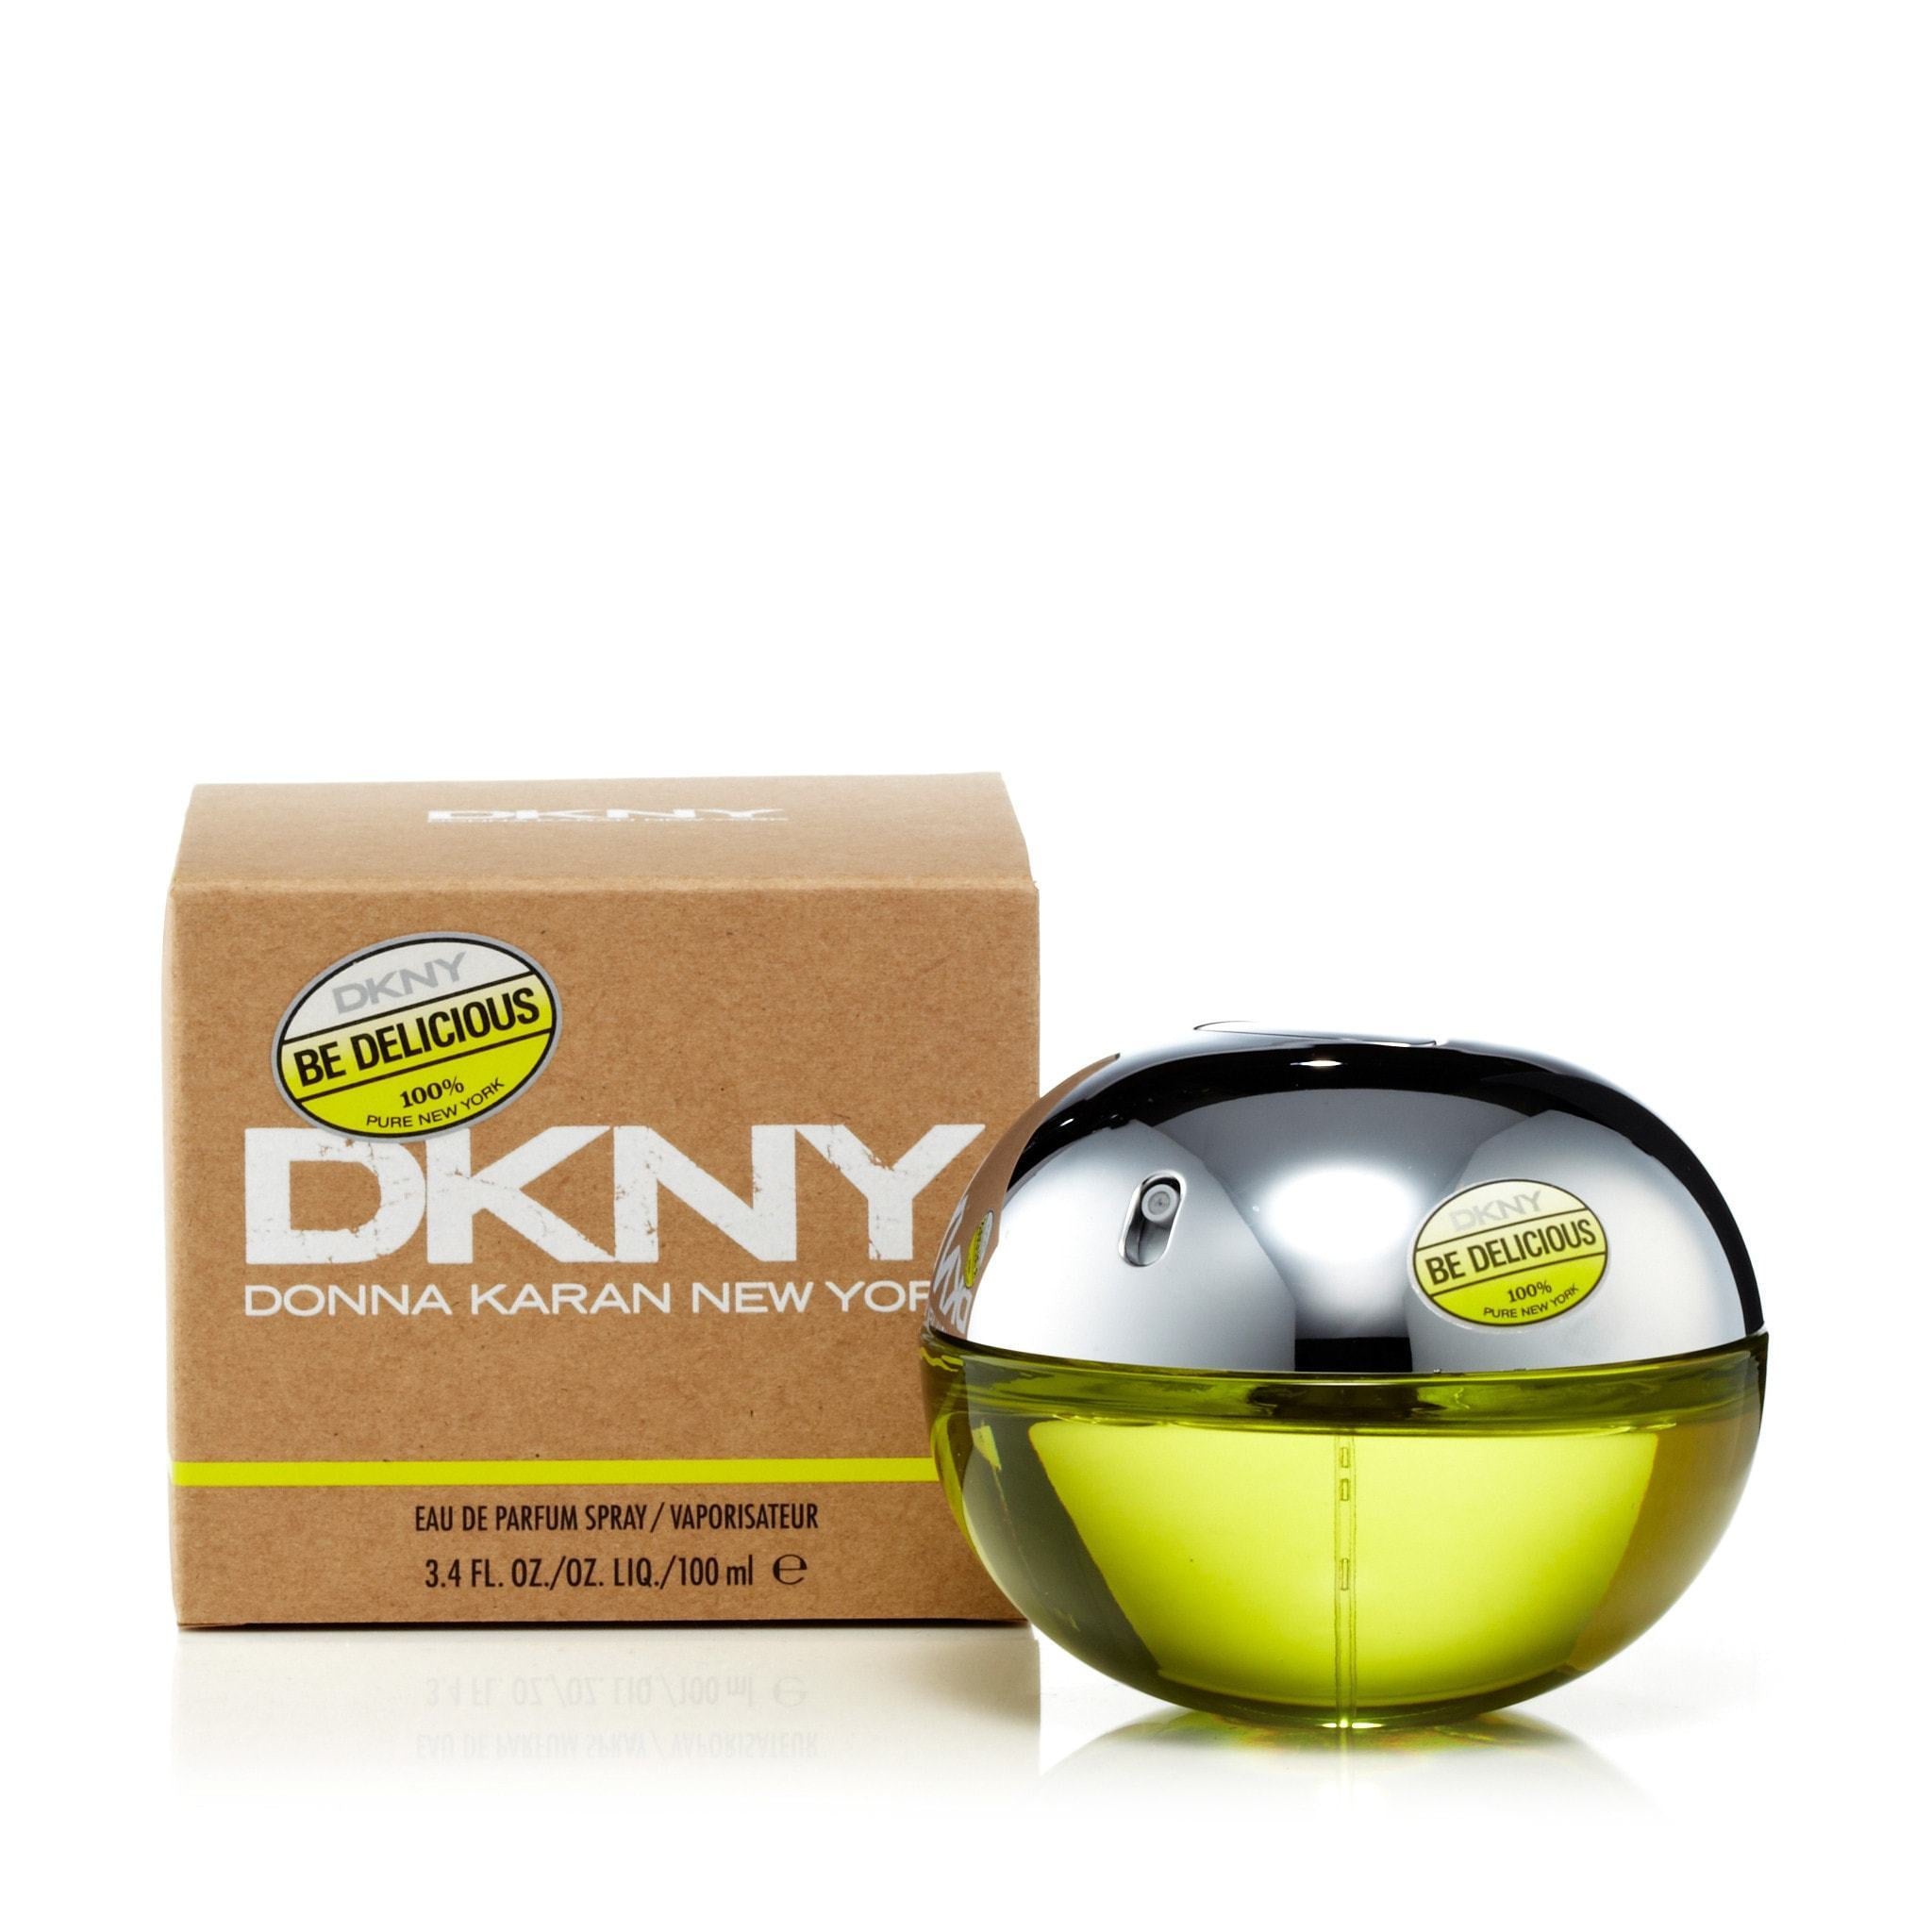 Dkny be delicious цены. Donna Karan DKNY be delicious. Донна Каран Нью-Йорк зеленое яблоко 100 мл. Духи DKNY Donna Karan. Духи Дона Коран Нью Йорк.